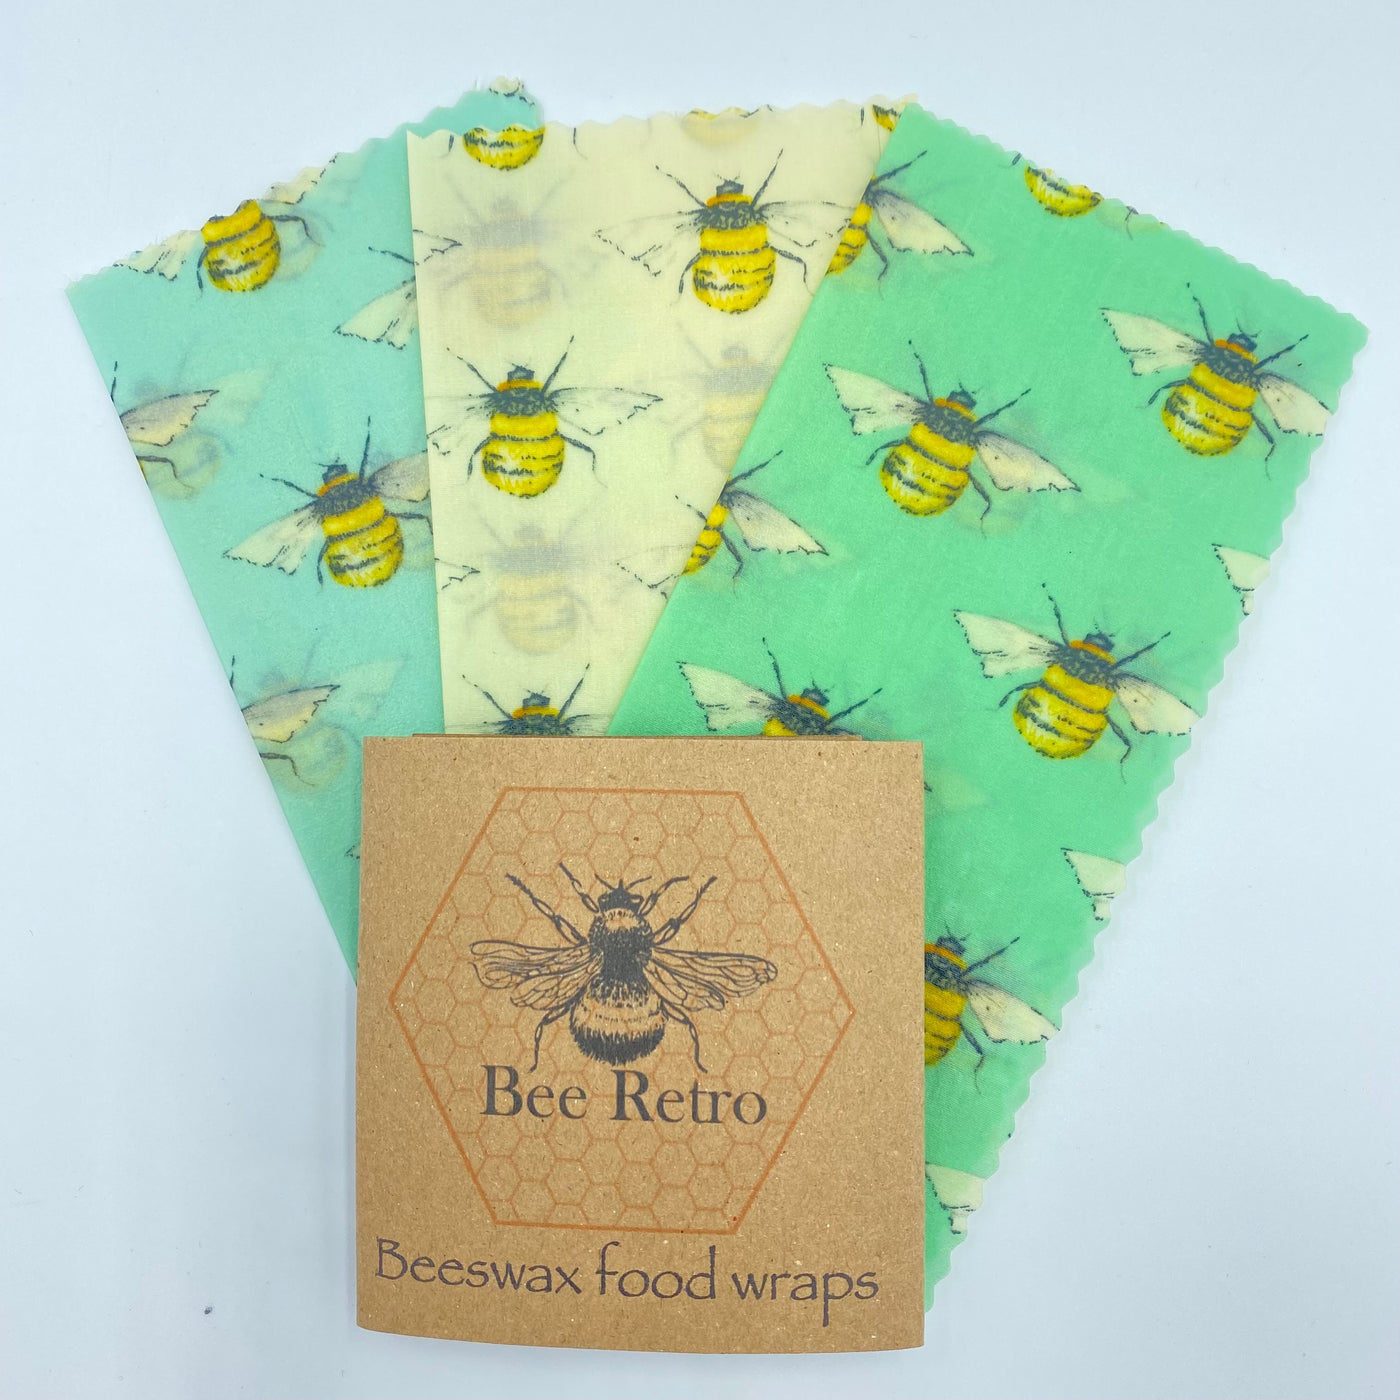 Beeswax wraps, Beeswax food wrap